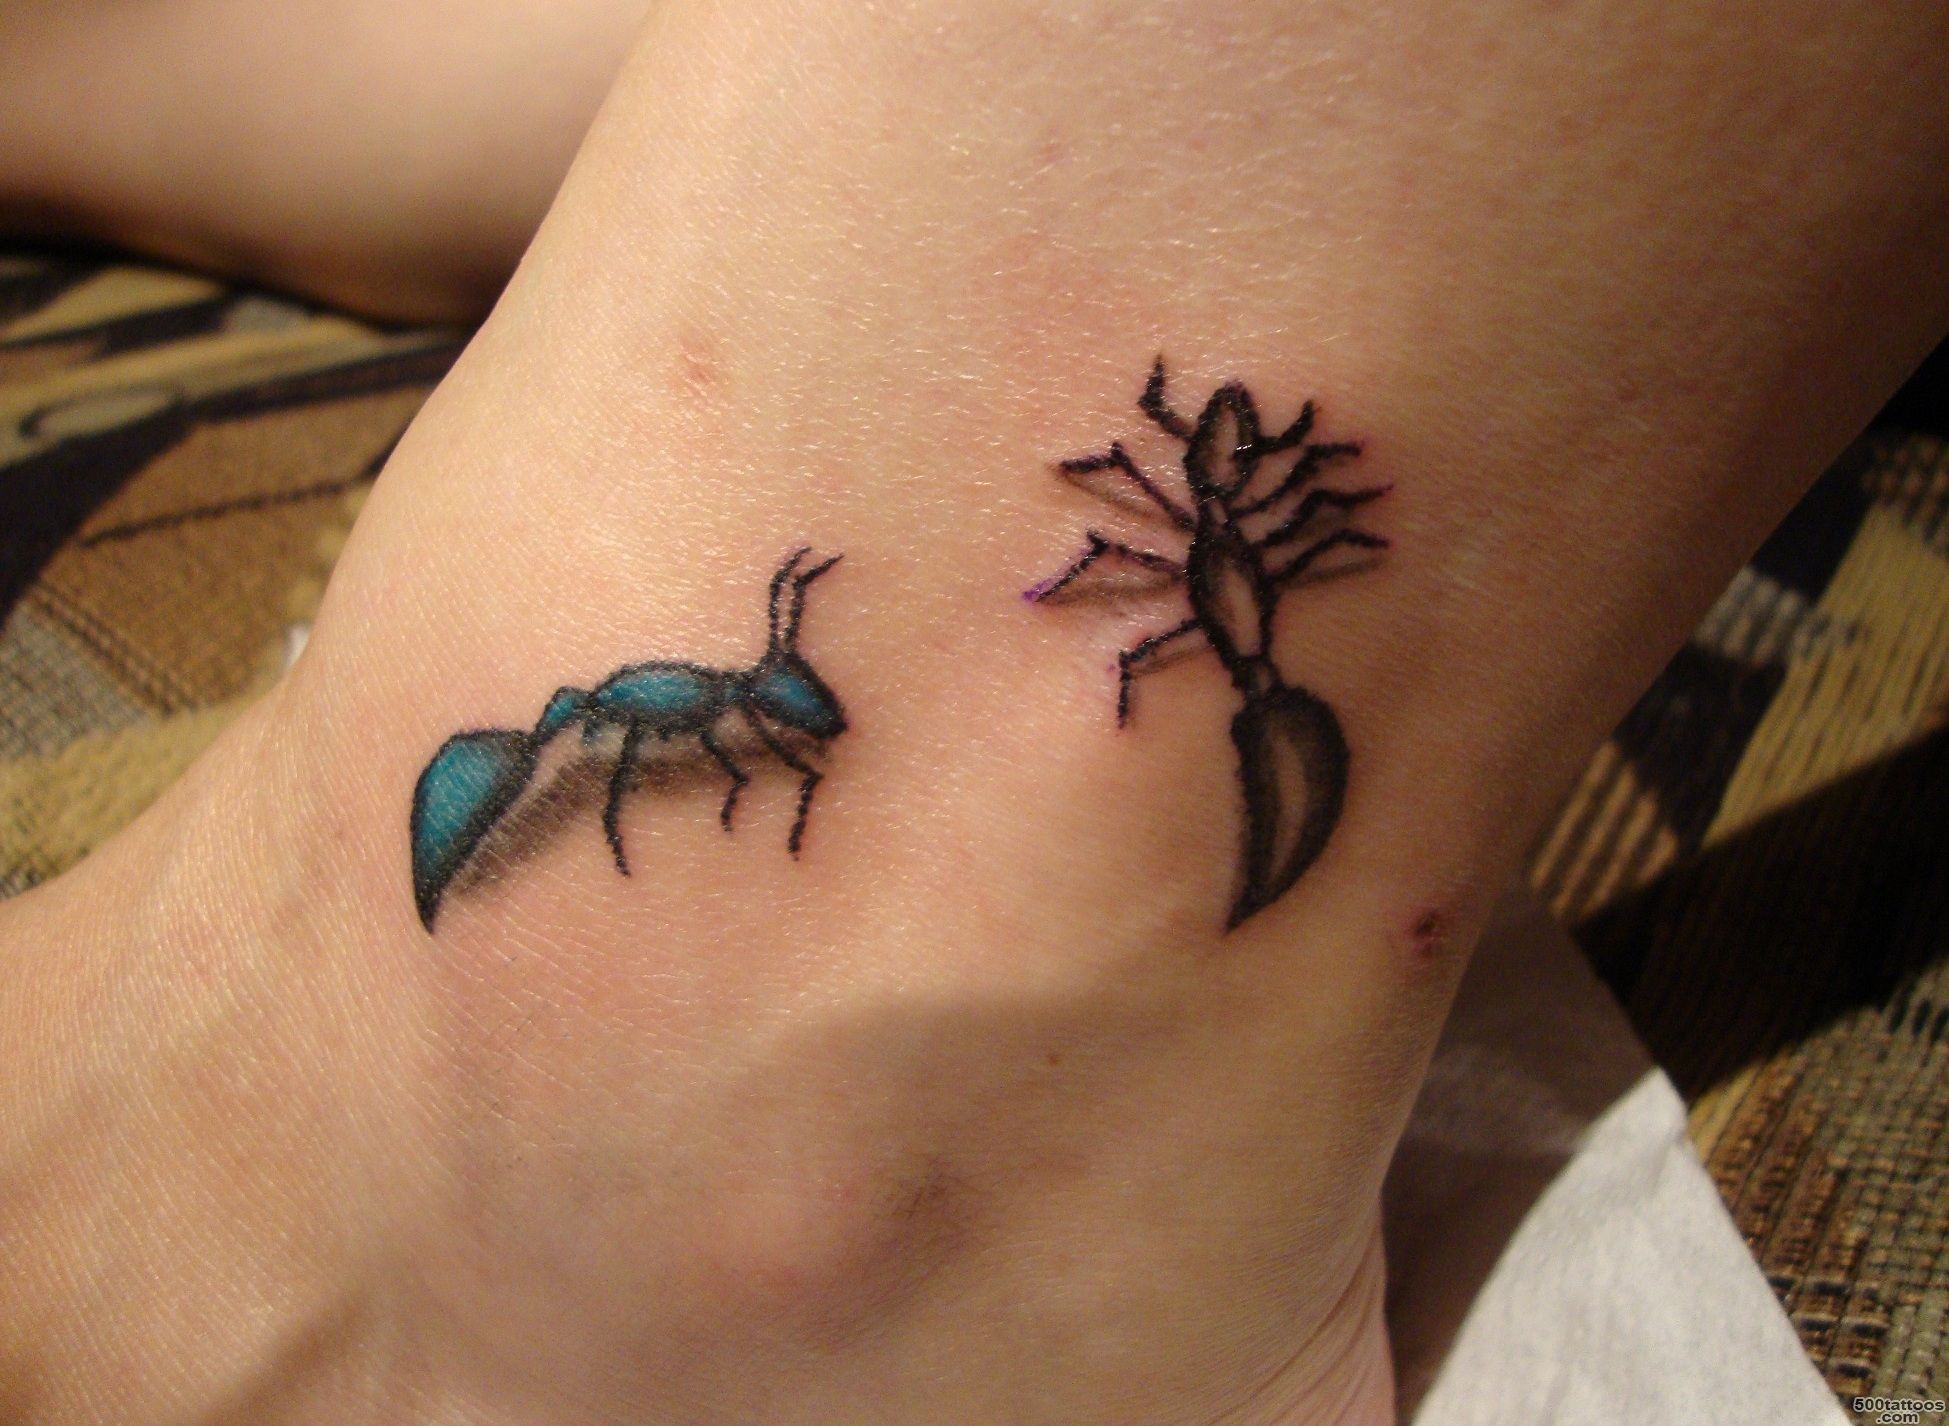 Ant Tattoo Design Ideas - wide 3